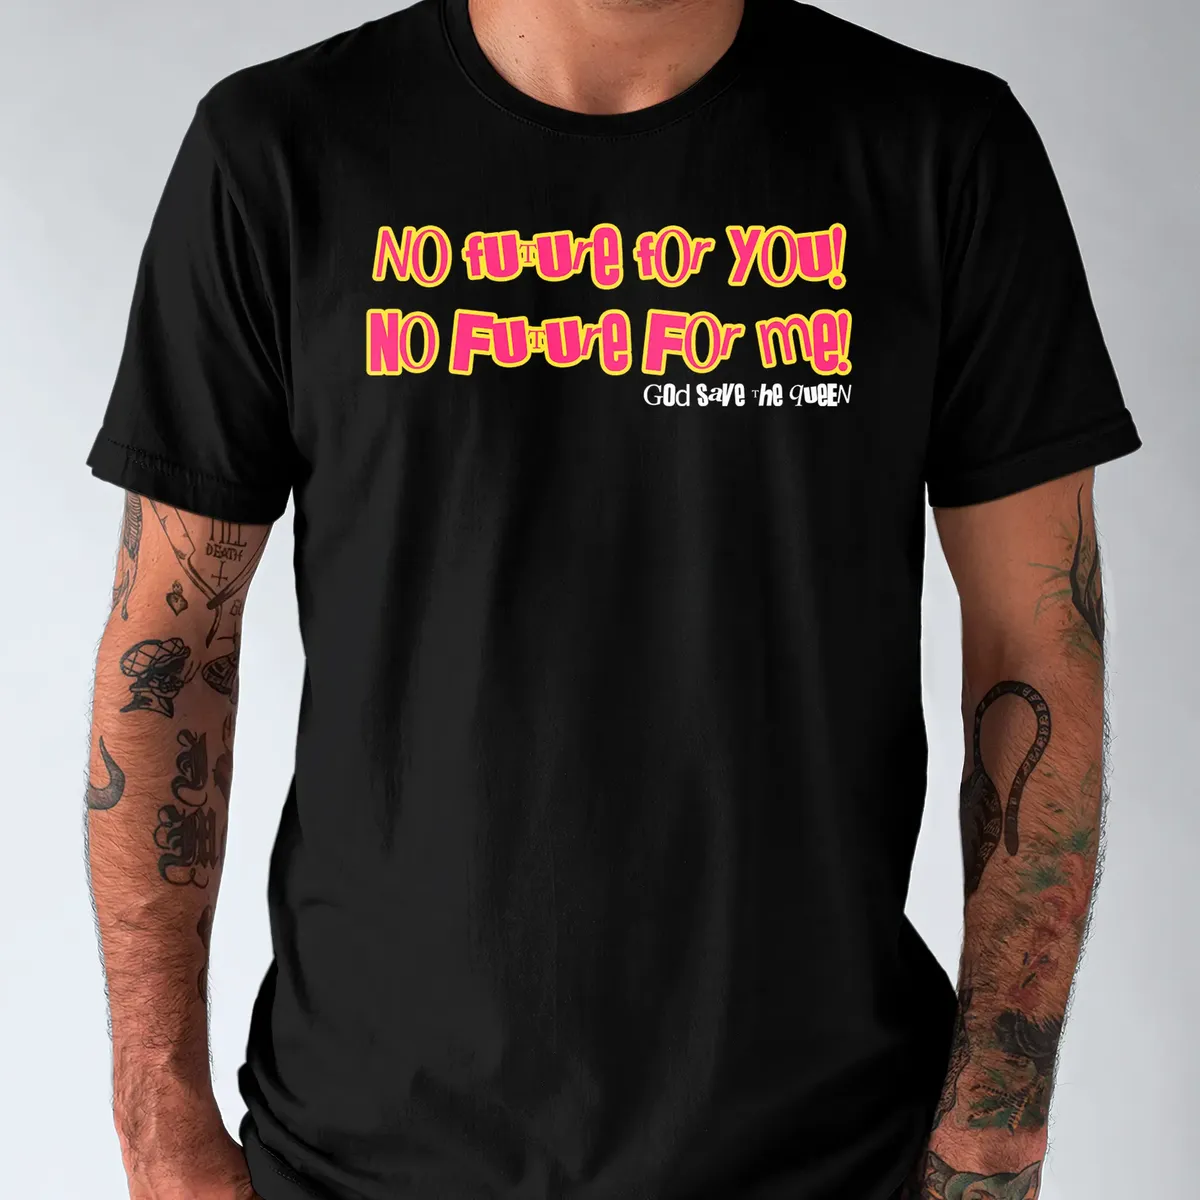 Nome do produto: Camiseta Sex Pistols God save The Queen (No Future)